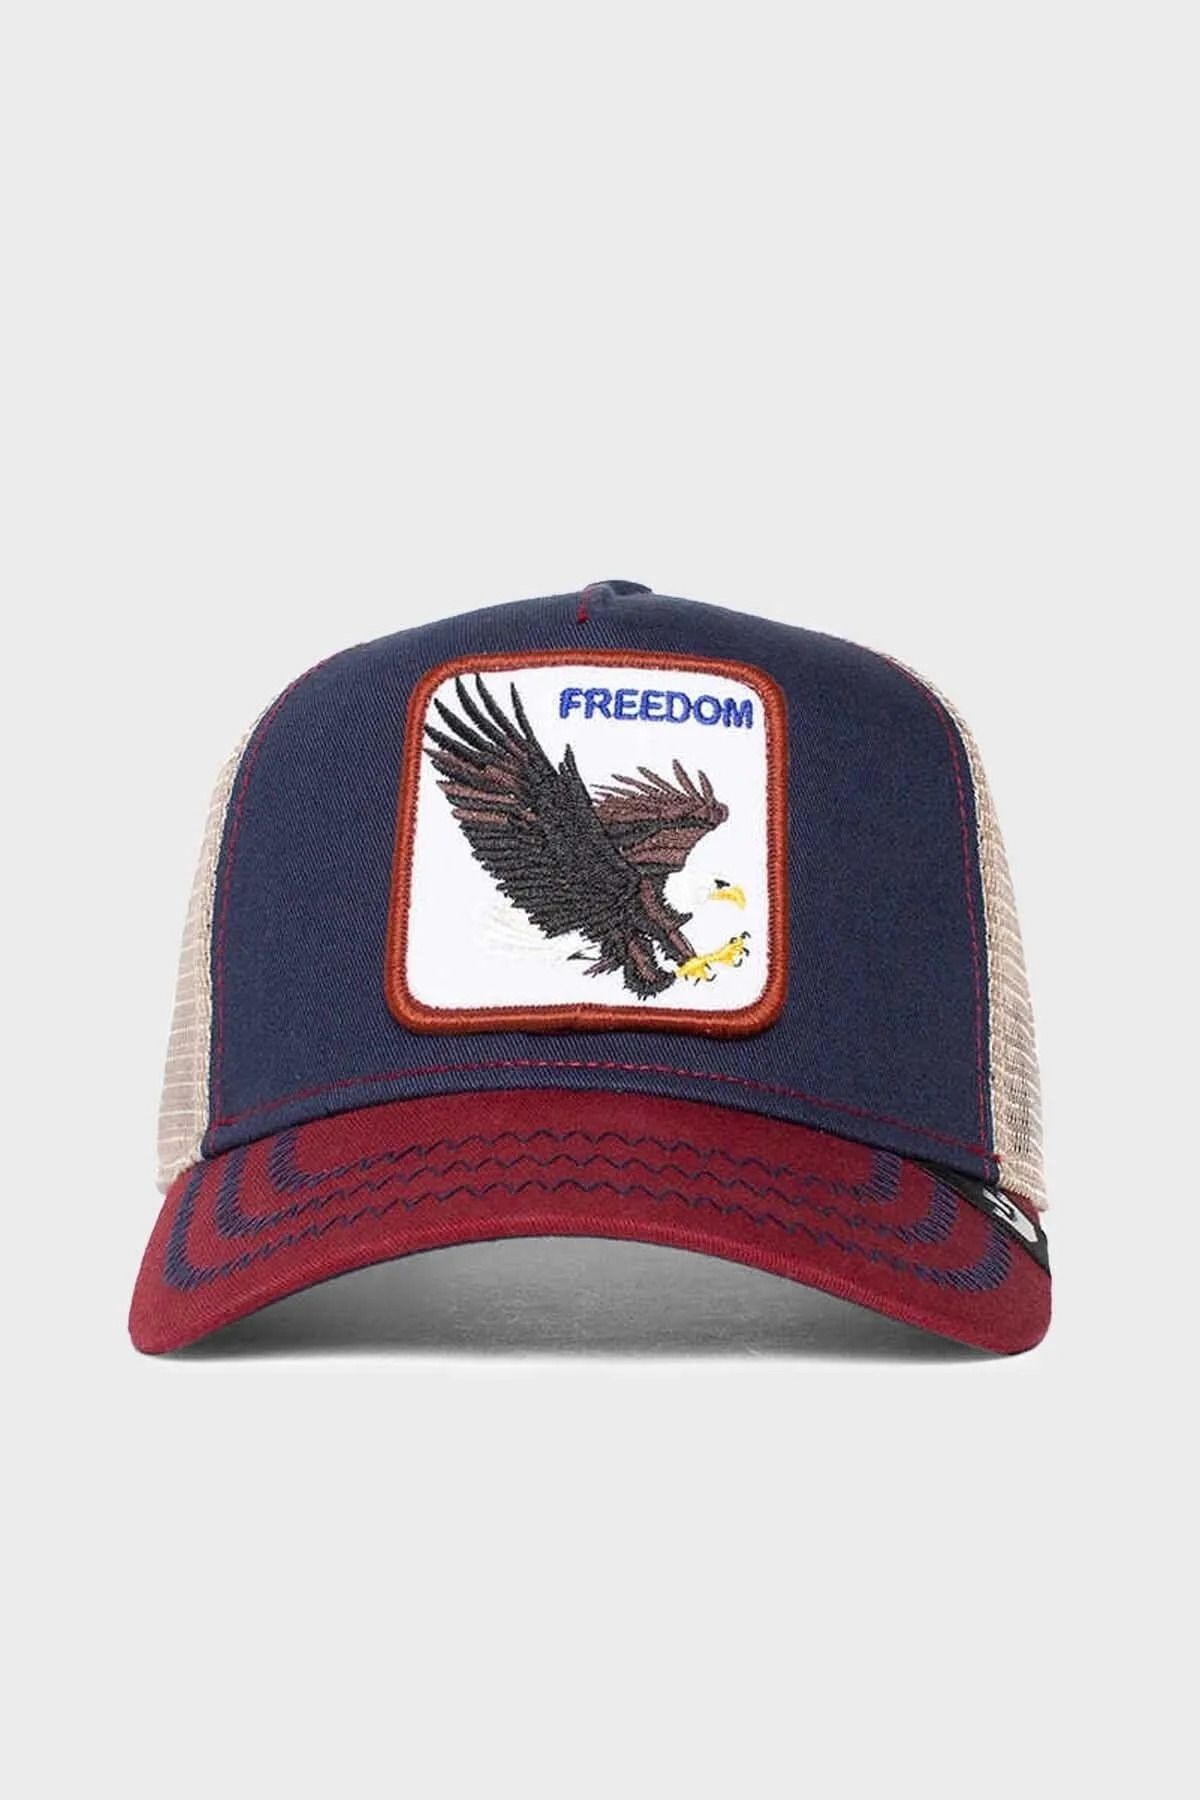 Goorin Bros The Freedom Eagle